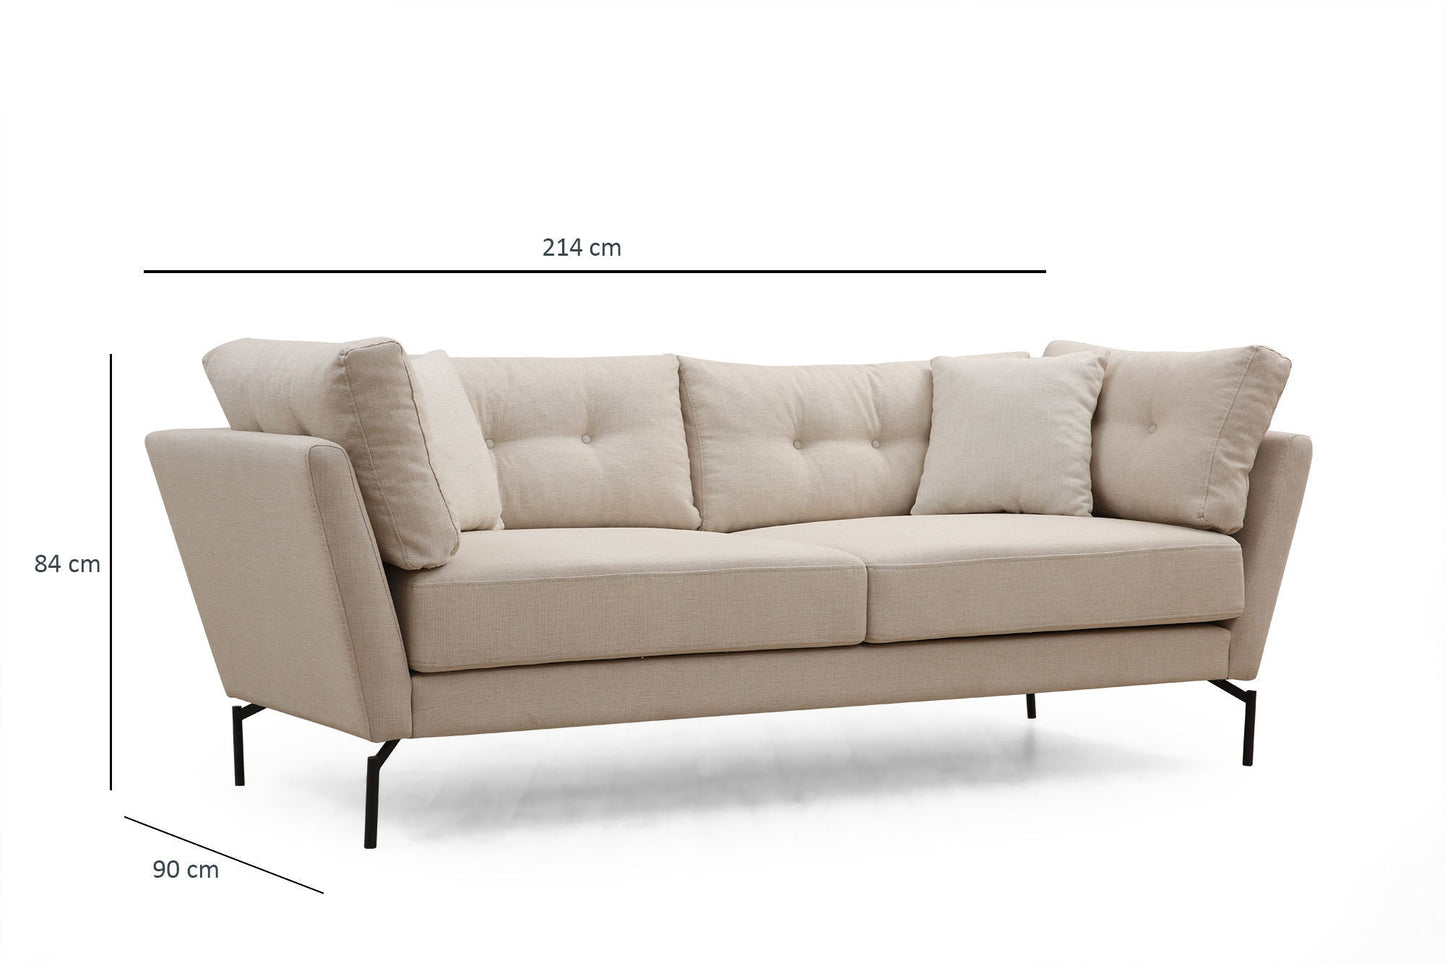 Mapa - Creme - 3-sæders sofa / Outlet